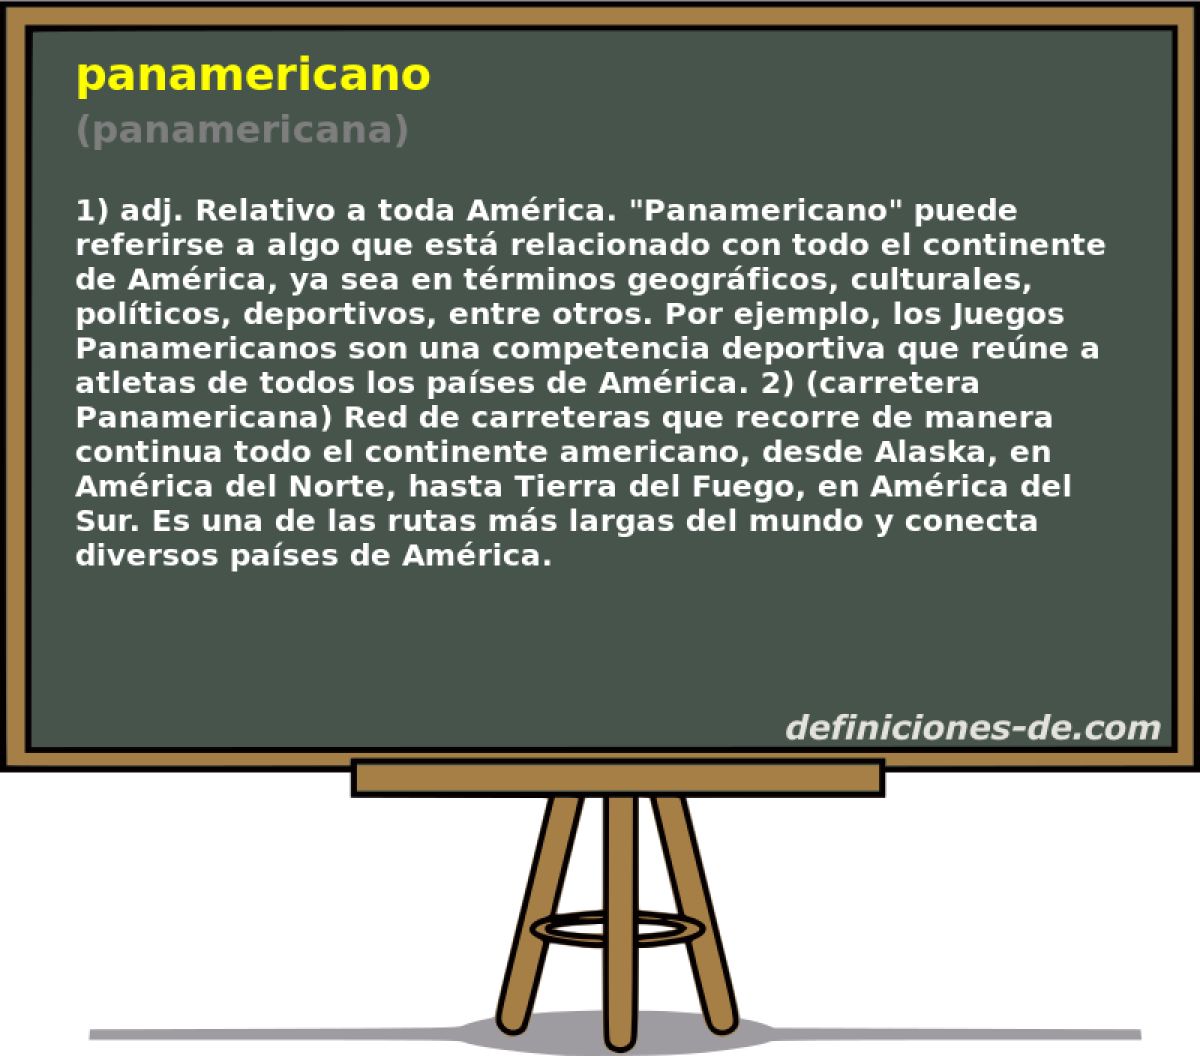 panamericano (panamericana)